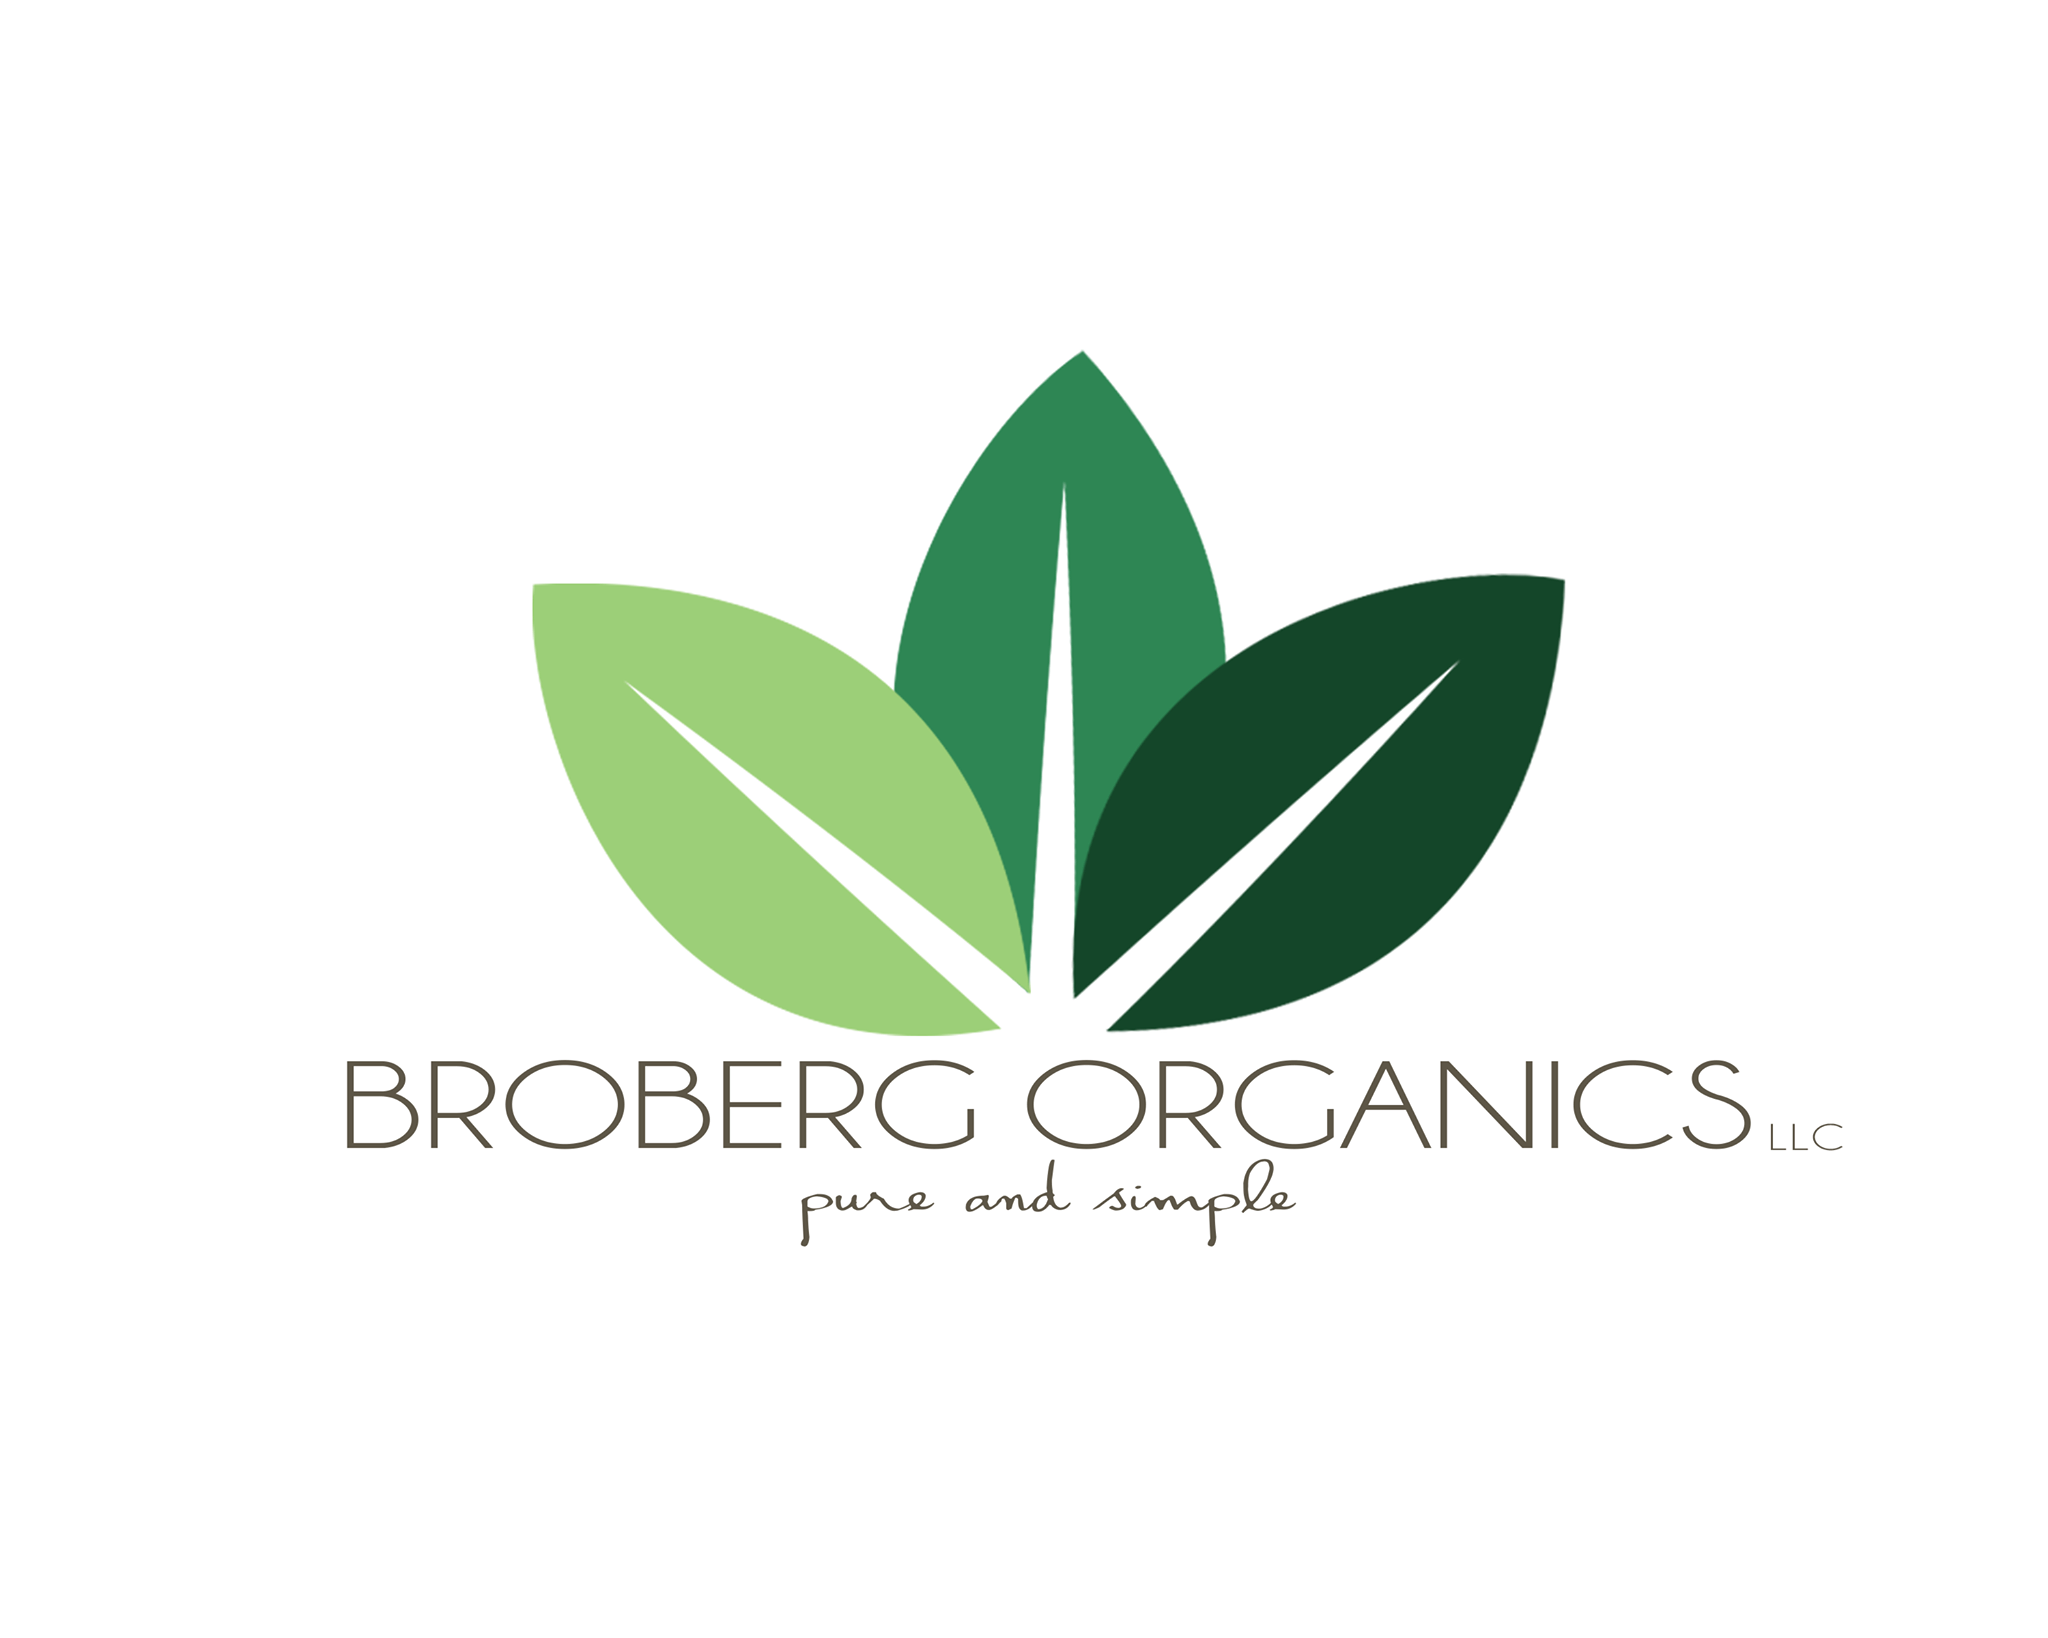 Broberg Organics LLC featured business photo